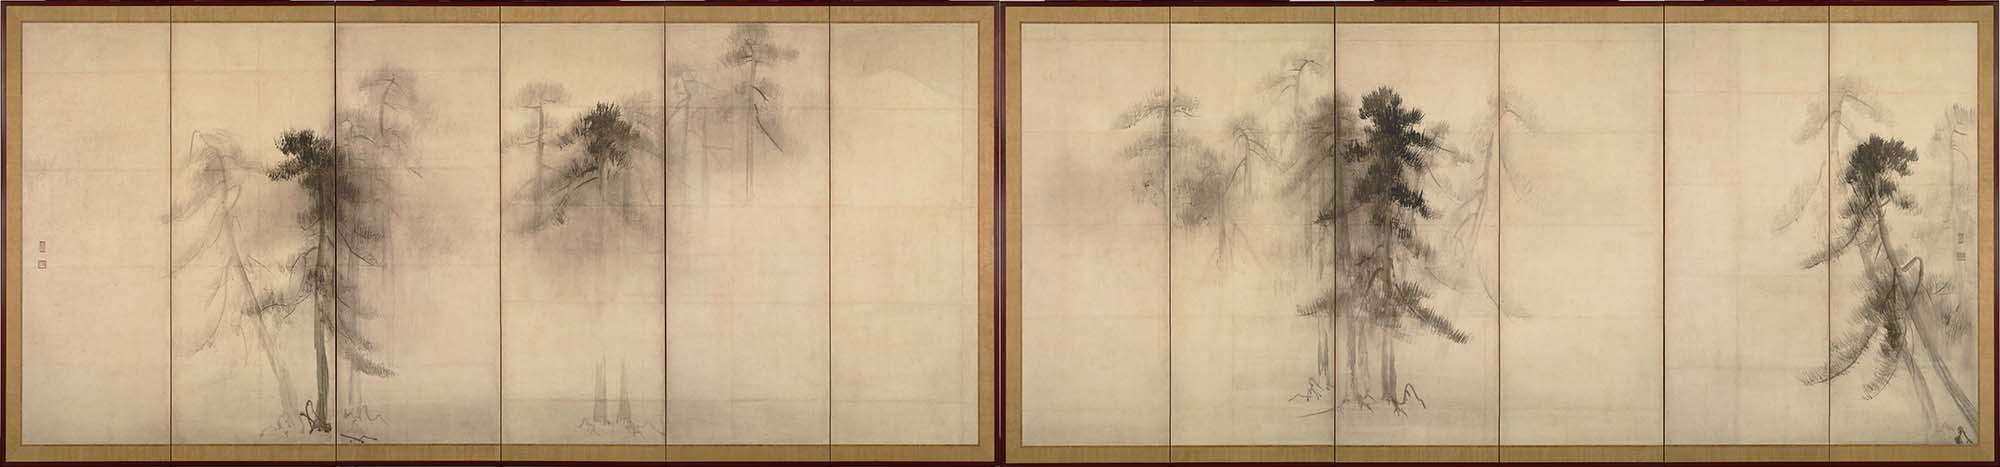 This is “The Shorinzu byobu”, the pine trees screen, drawn by Hasegawa Tohaku in the 16th century.